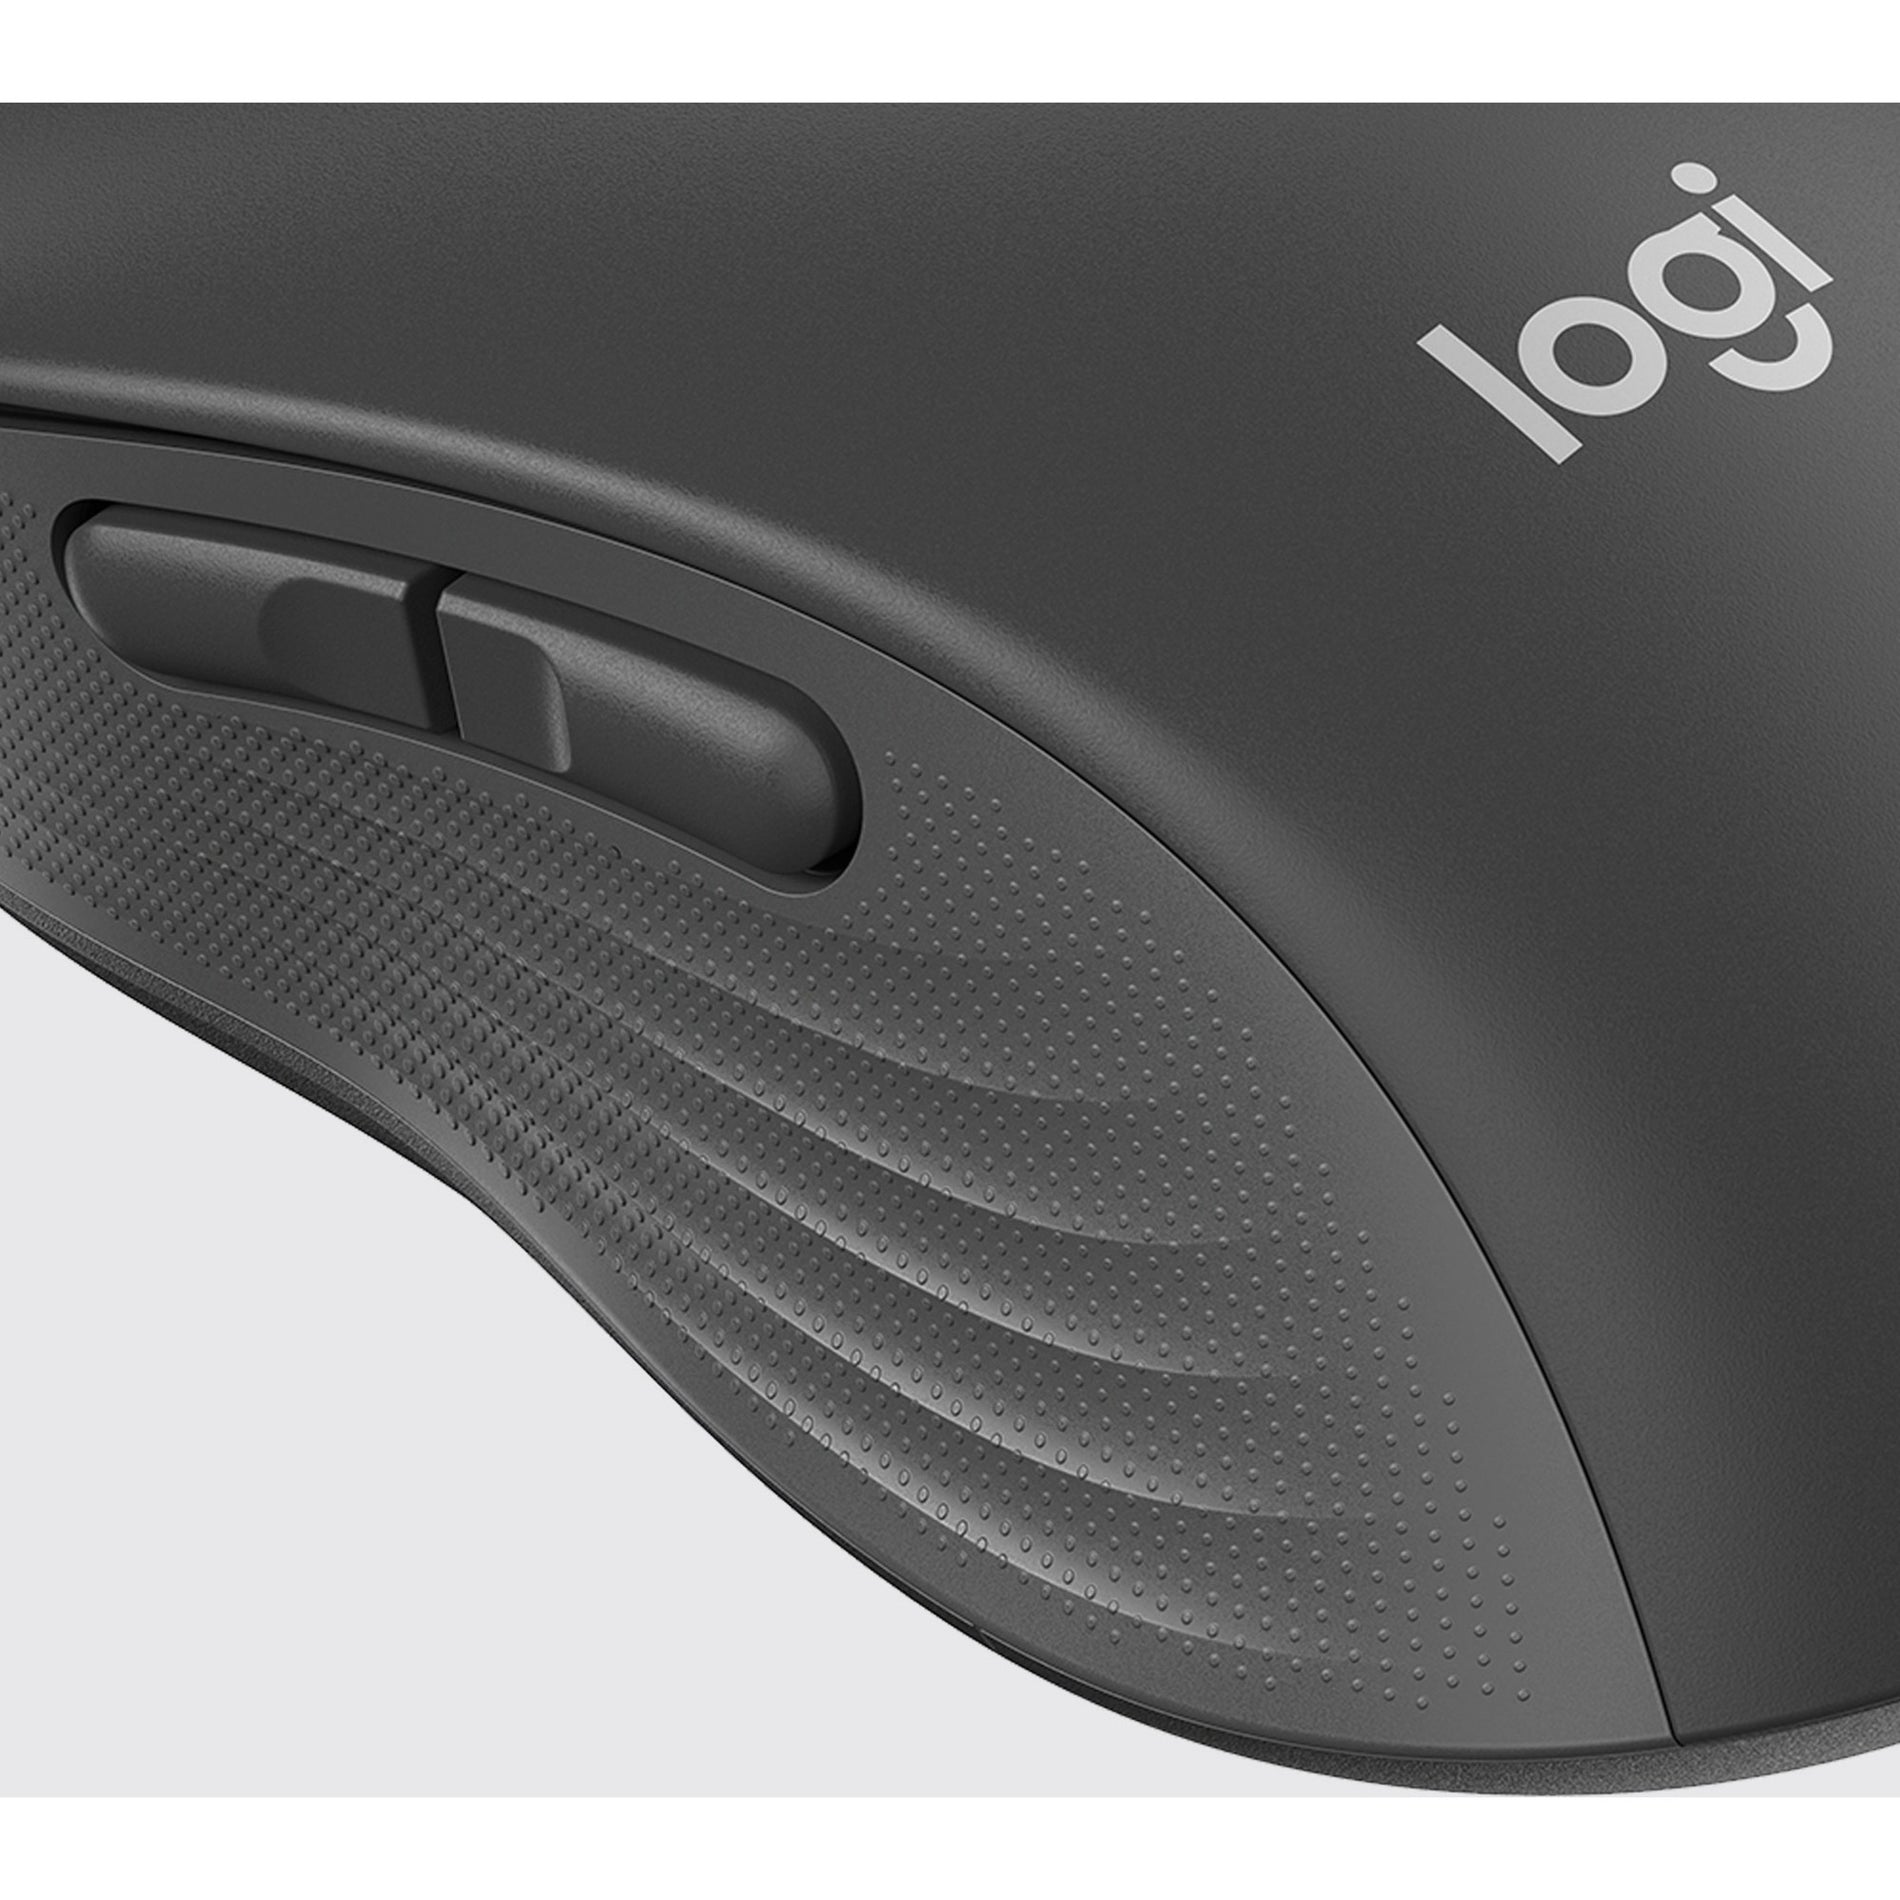 Logitech 910-006346 Signature M650L Mouse, Wireless Bluetooth/Radio Frequency, Graphite